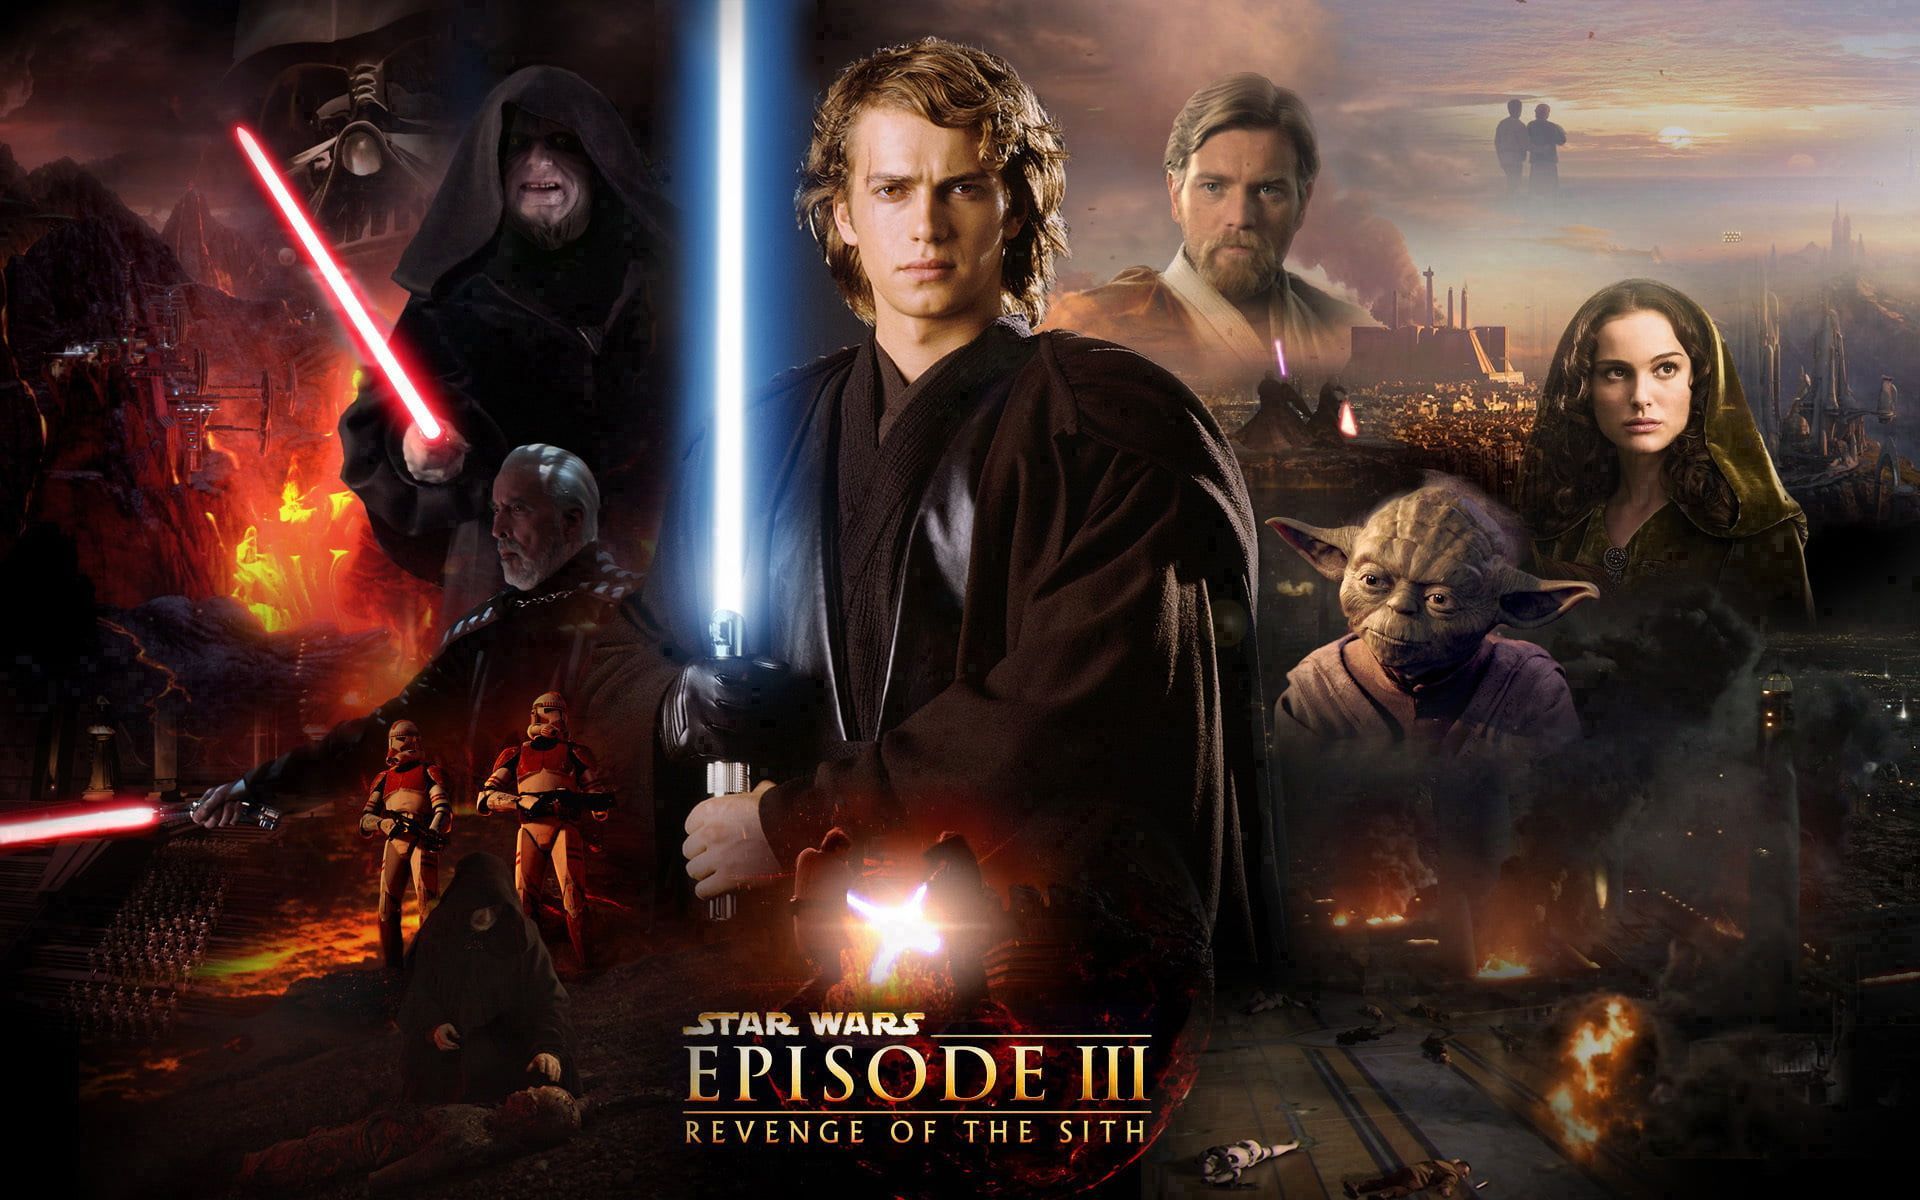 Star Wars Episode II Revenge of the Sith wallpaper Star Wars Star wars Darth Vader #Iodine #lightsaber. Star wars episode ii, Star wars episodes, Star wars film